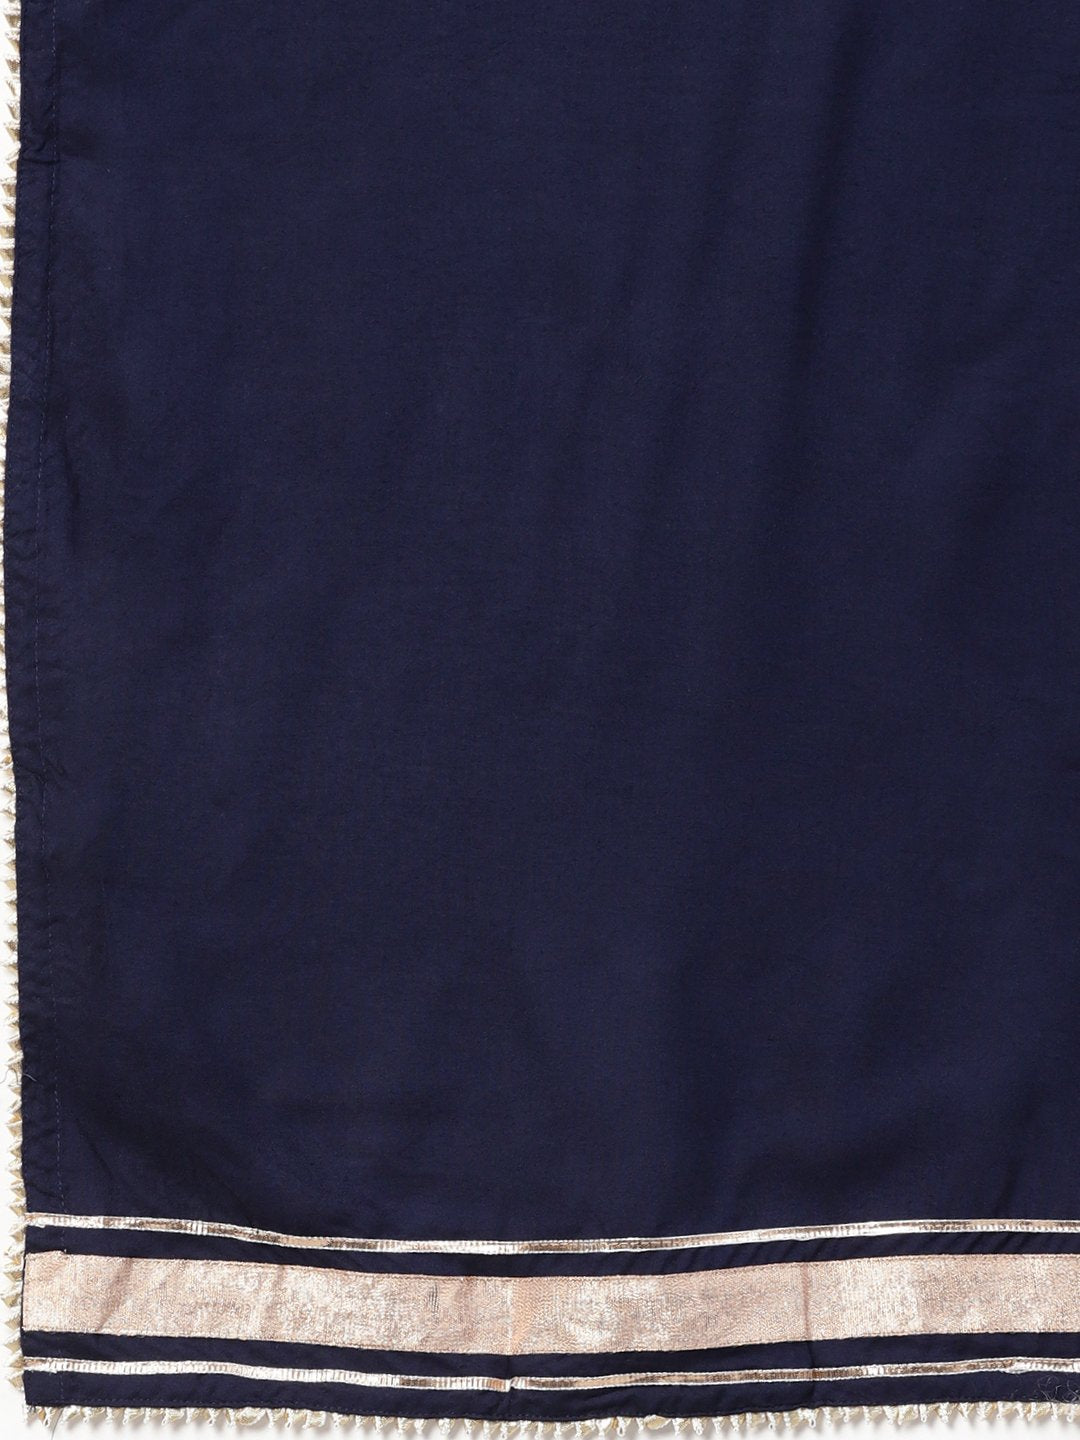 Ishin Women's Cotton Blue & Navy Blue Printed A-Line Kurta Sharara Dupatta Set